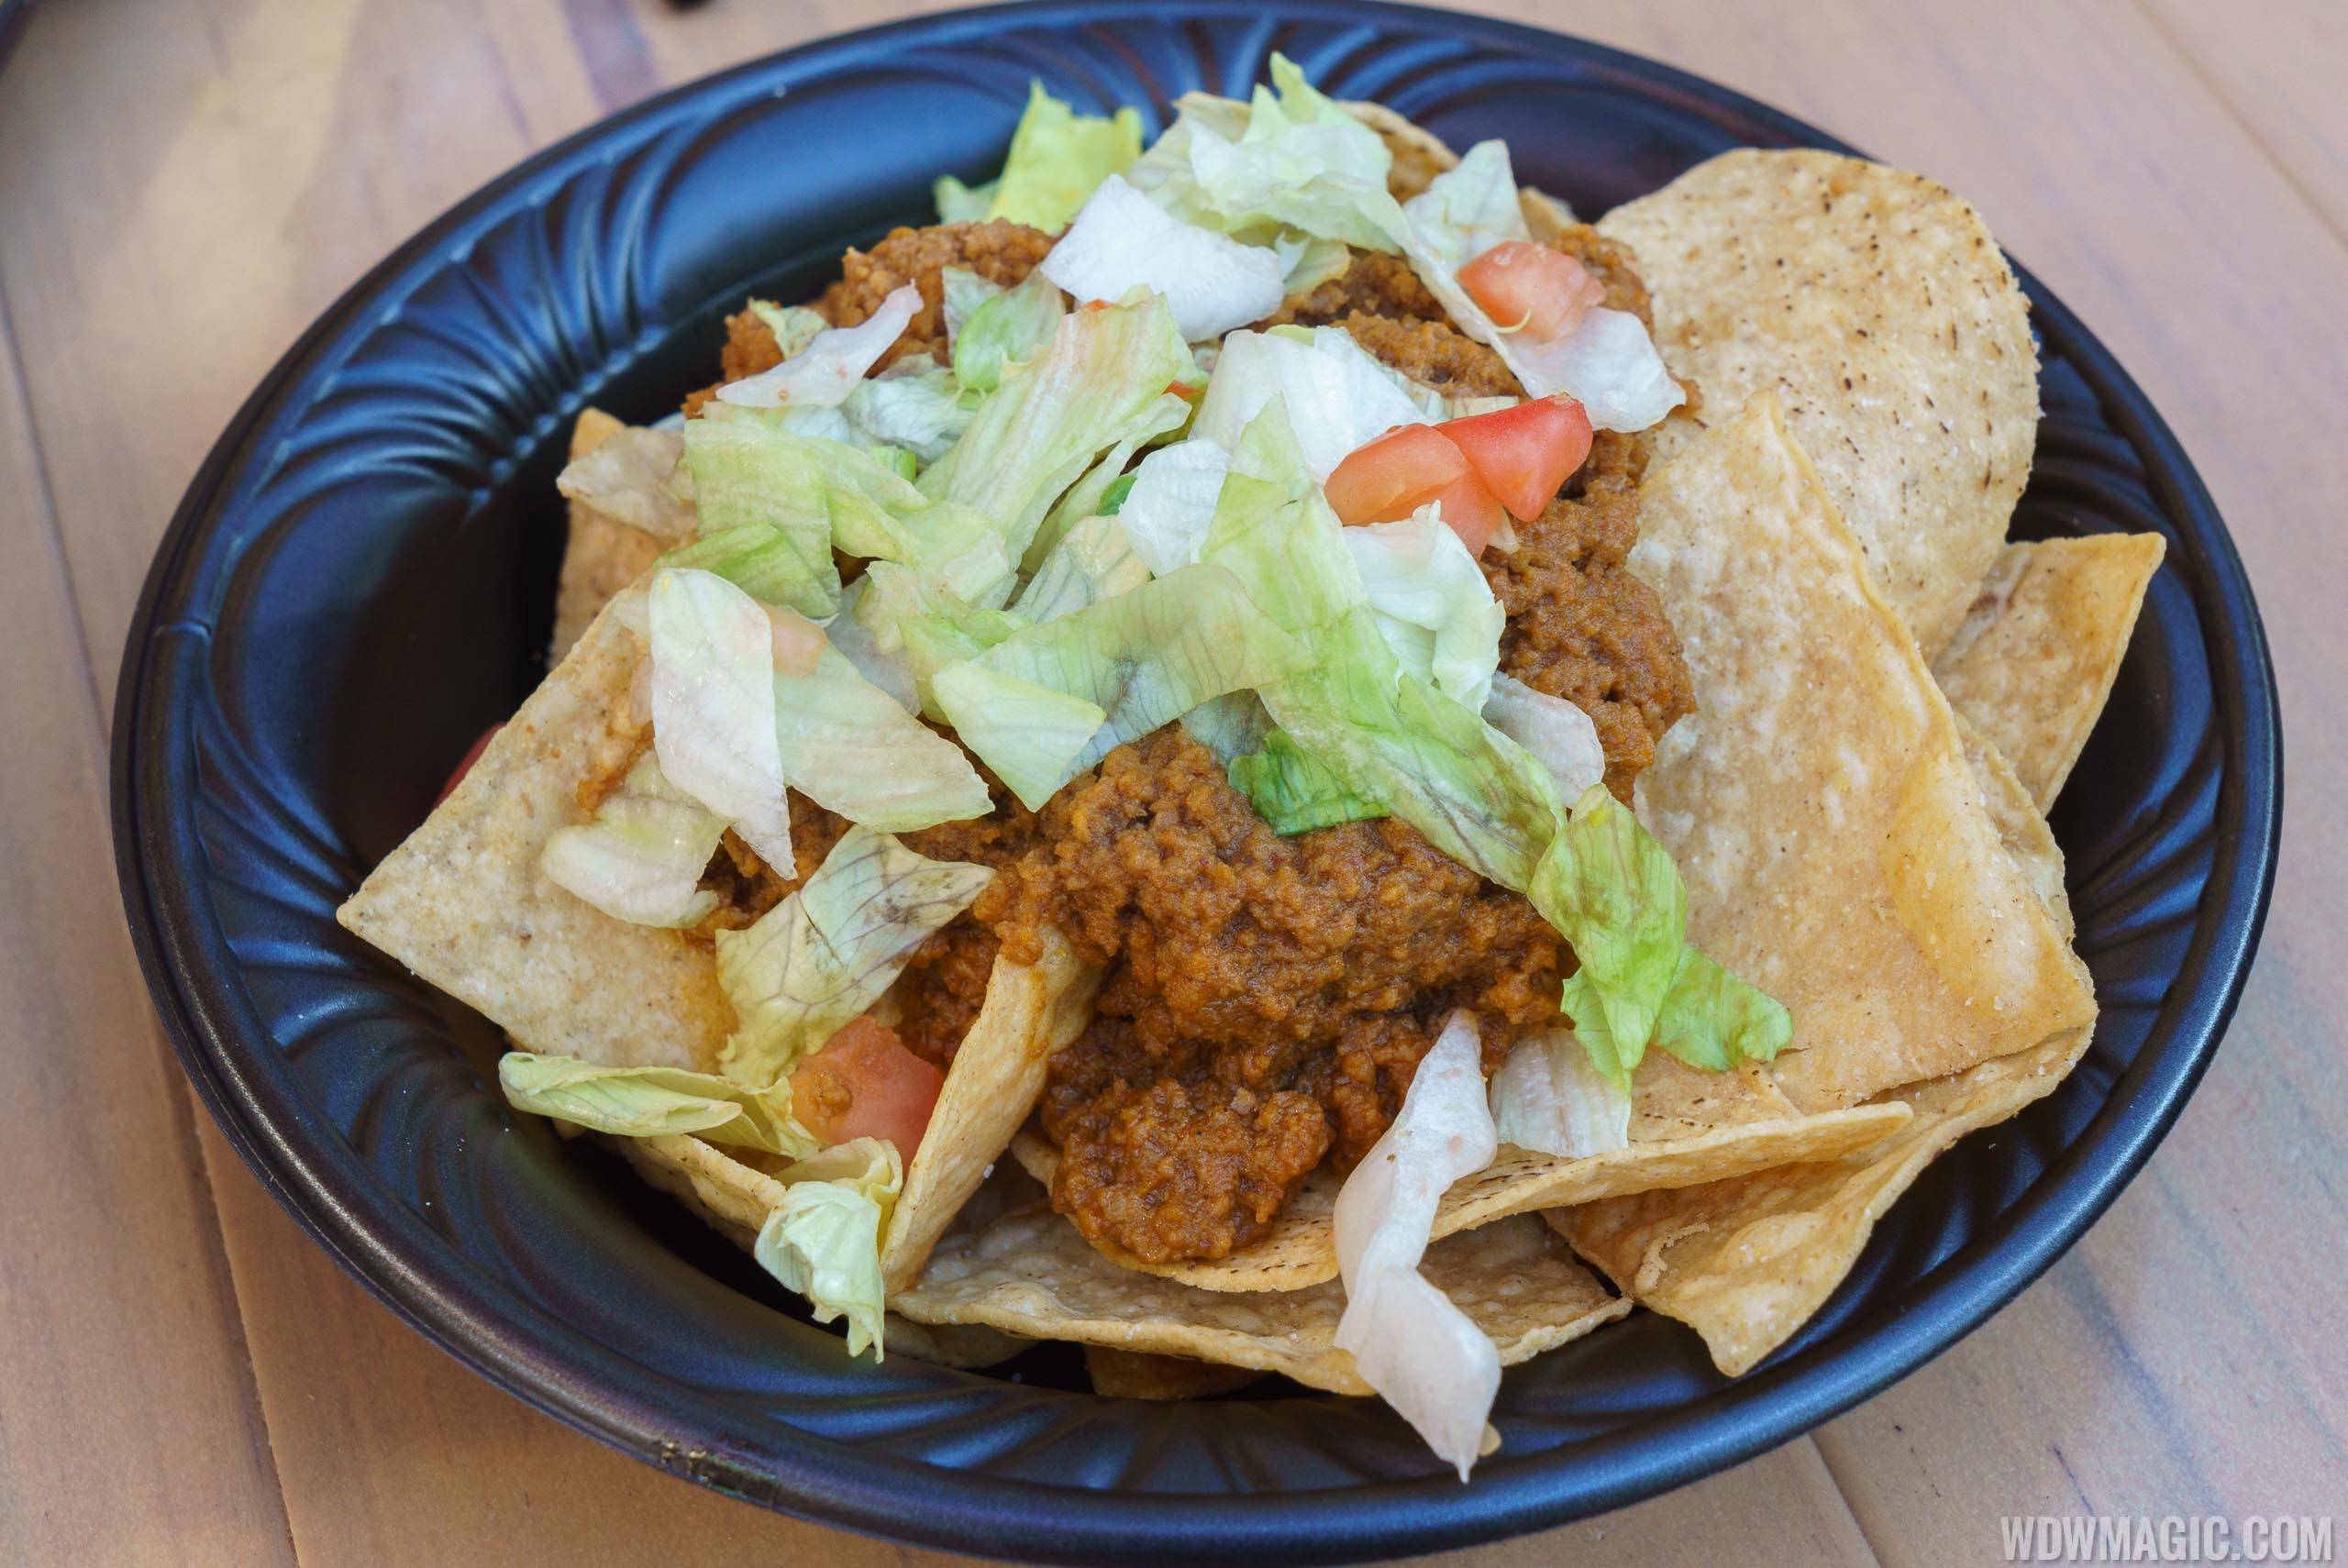 Pecos Bill Cafe - Fajita, Burritos, Nachos and Toppings Bar